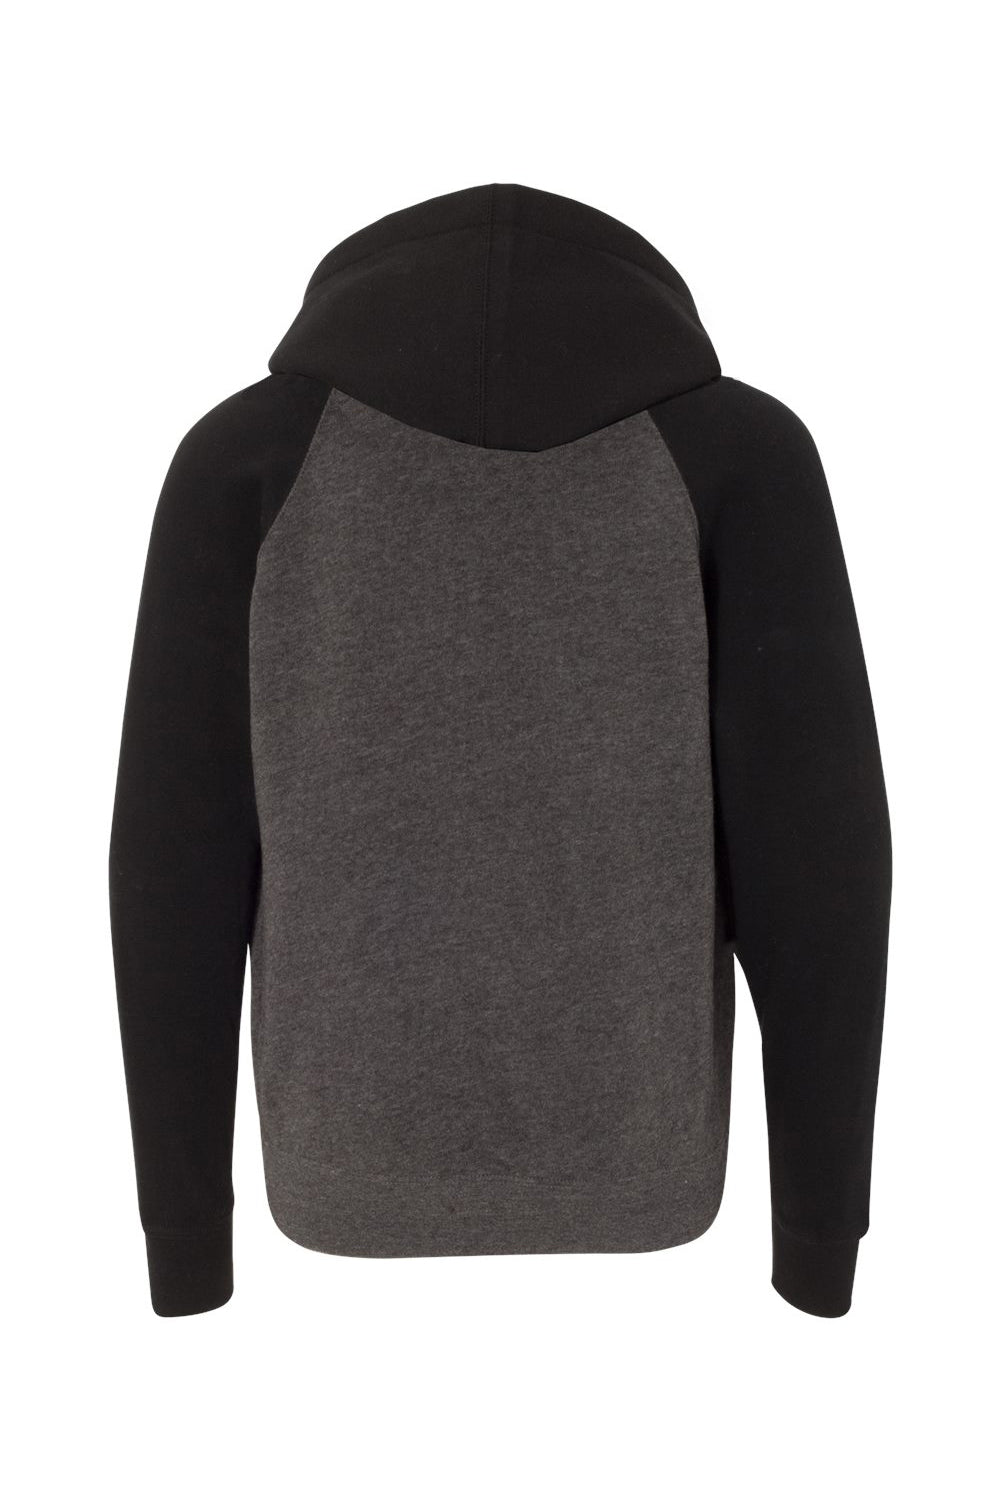 Independent Trading Co. PRM15YSB Youth Special Blend Raglan Hooded Sweatshirt Hoodie Carbon Grey/Black Flat Back